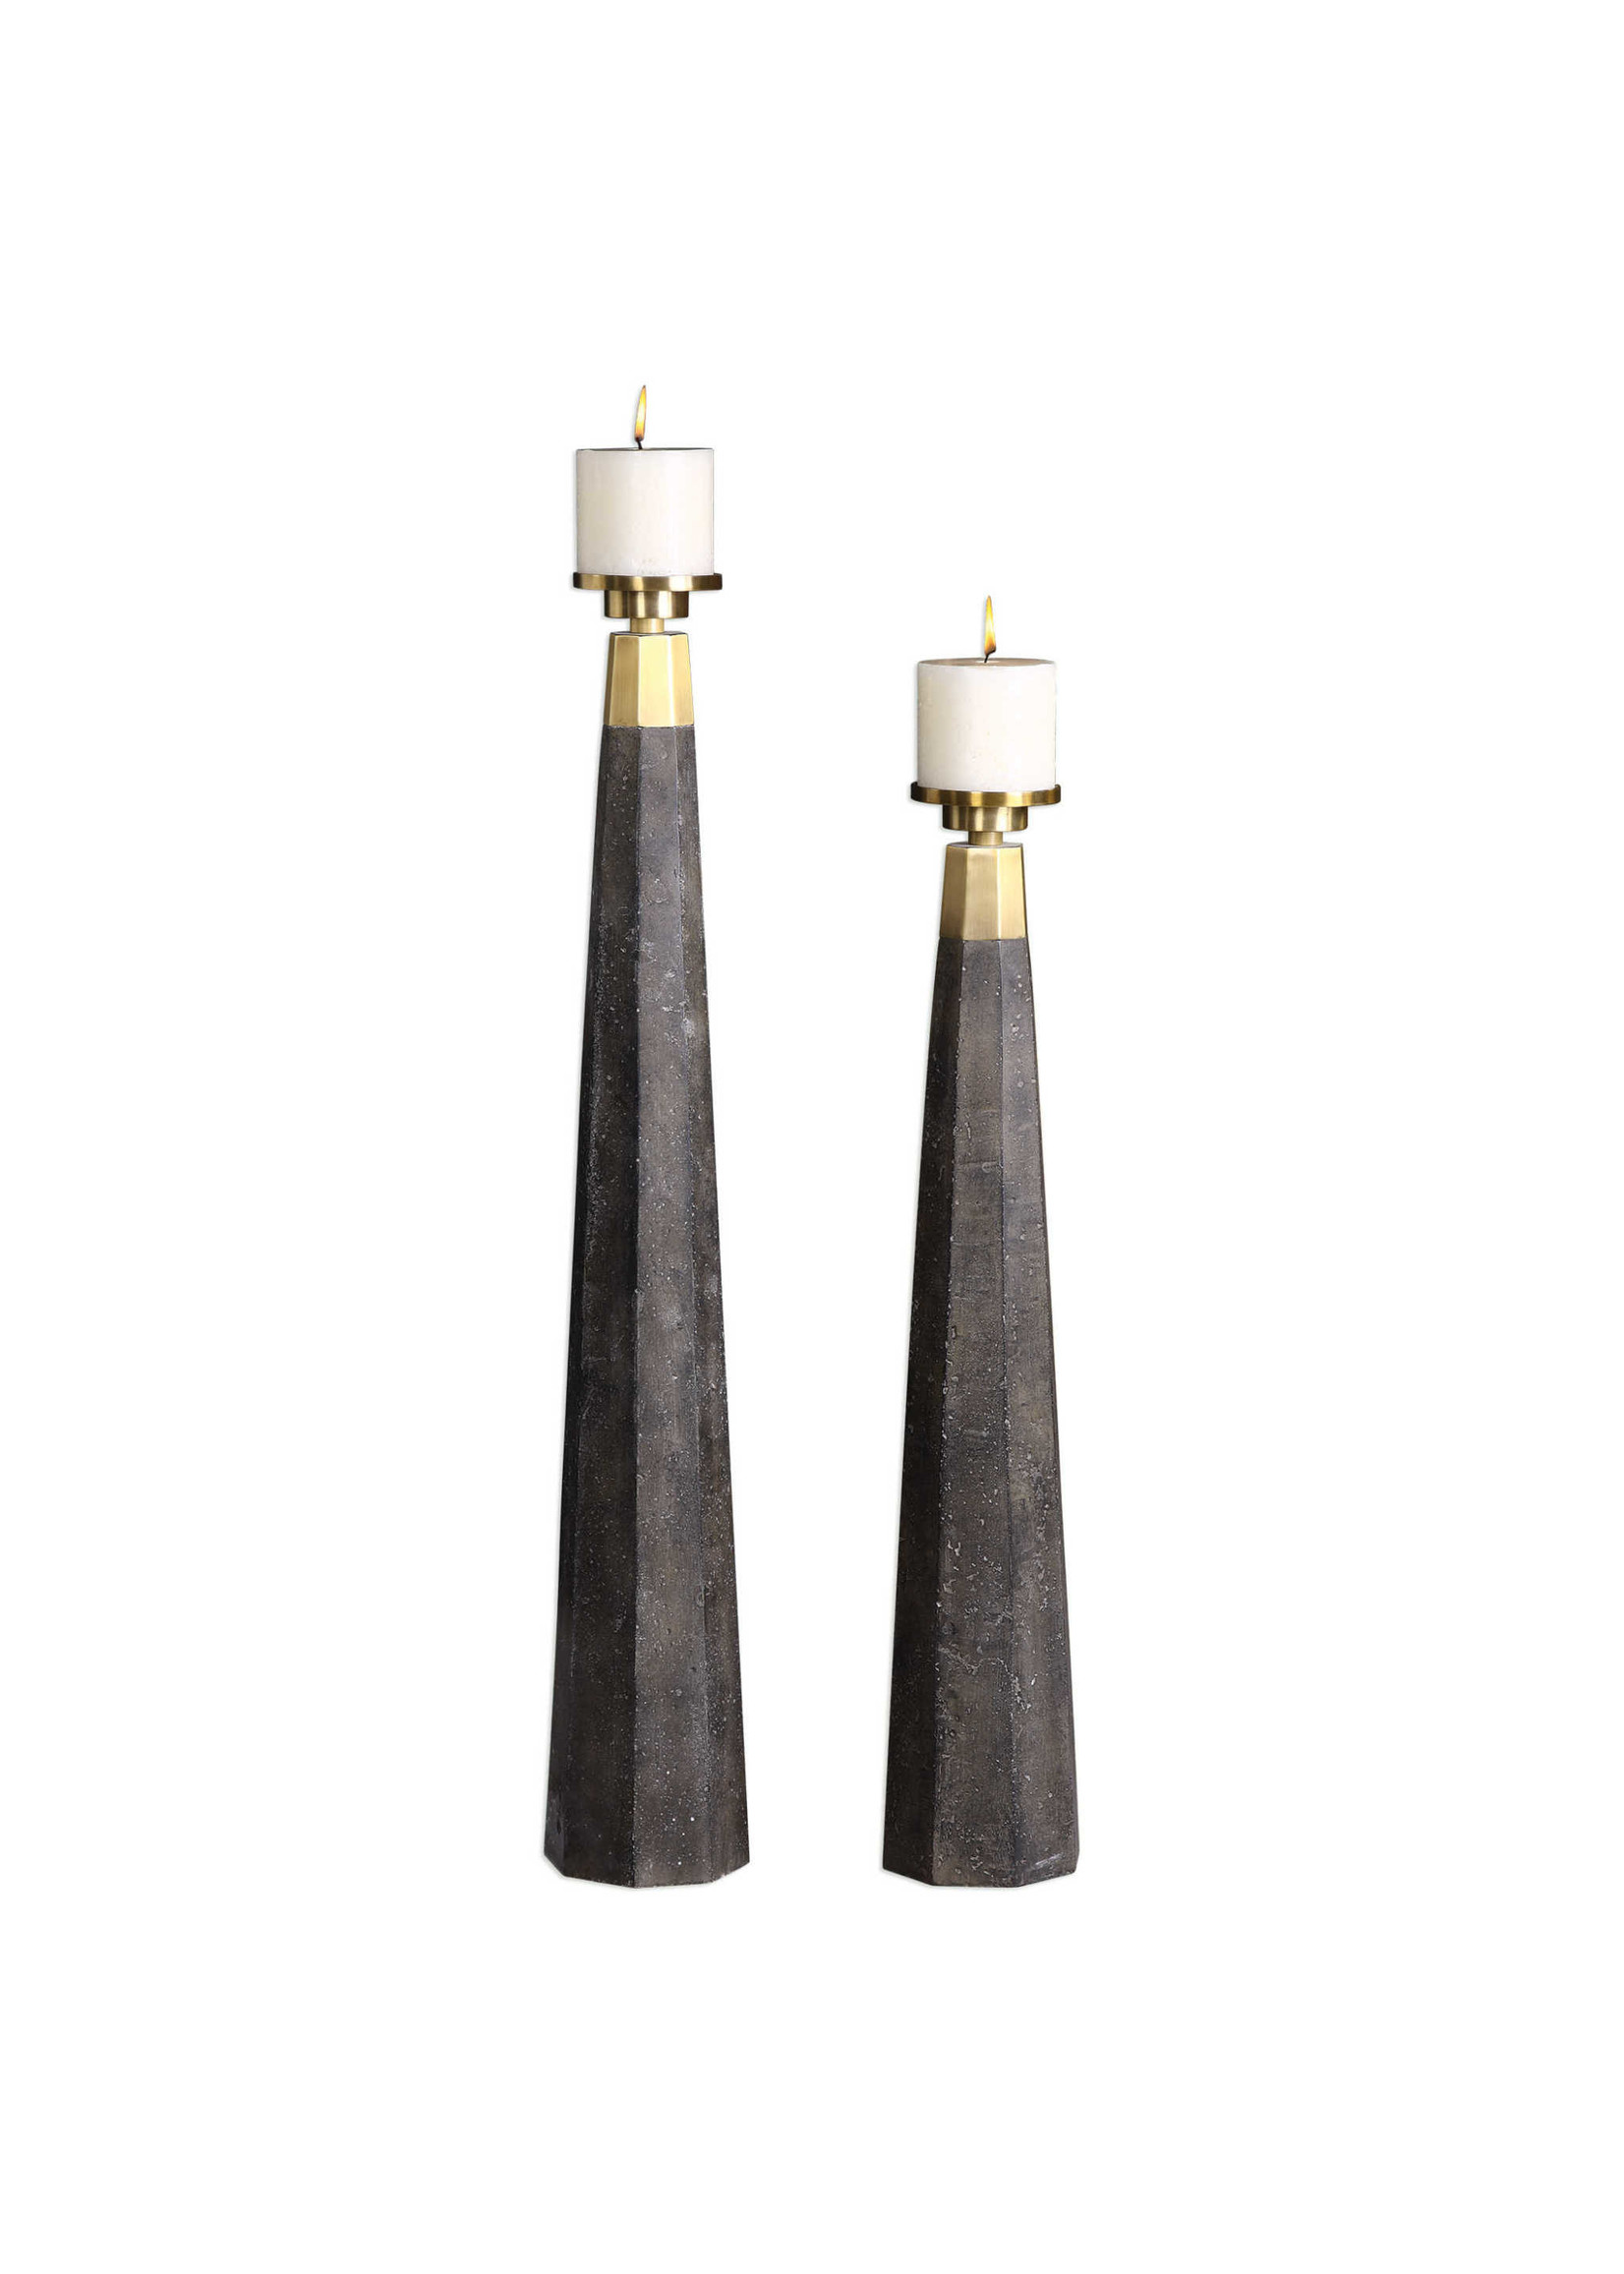 Uttermost / Revelation Pons Candleholder with Pillar Candle - Large